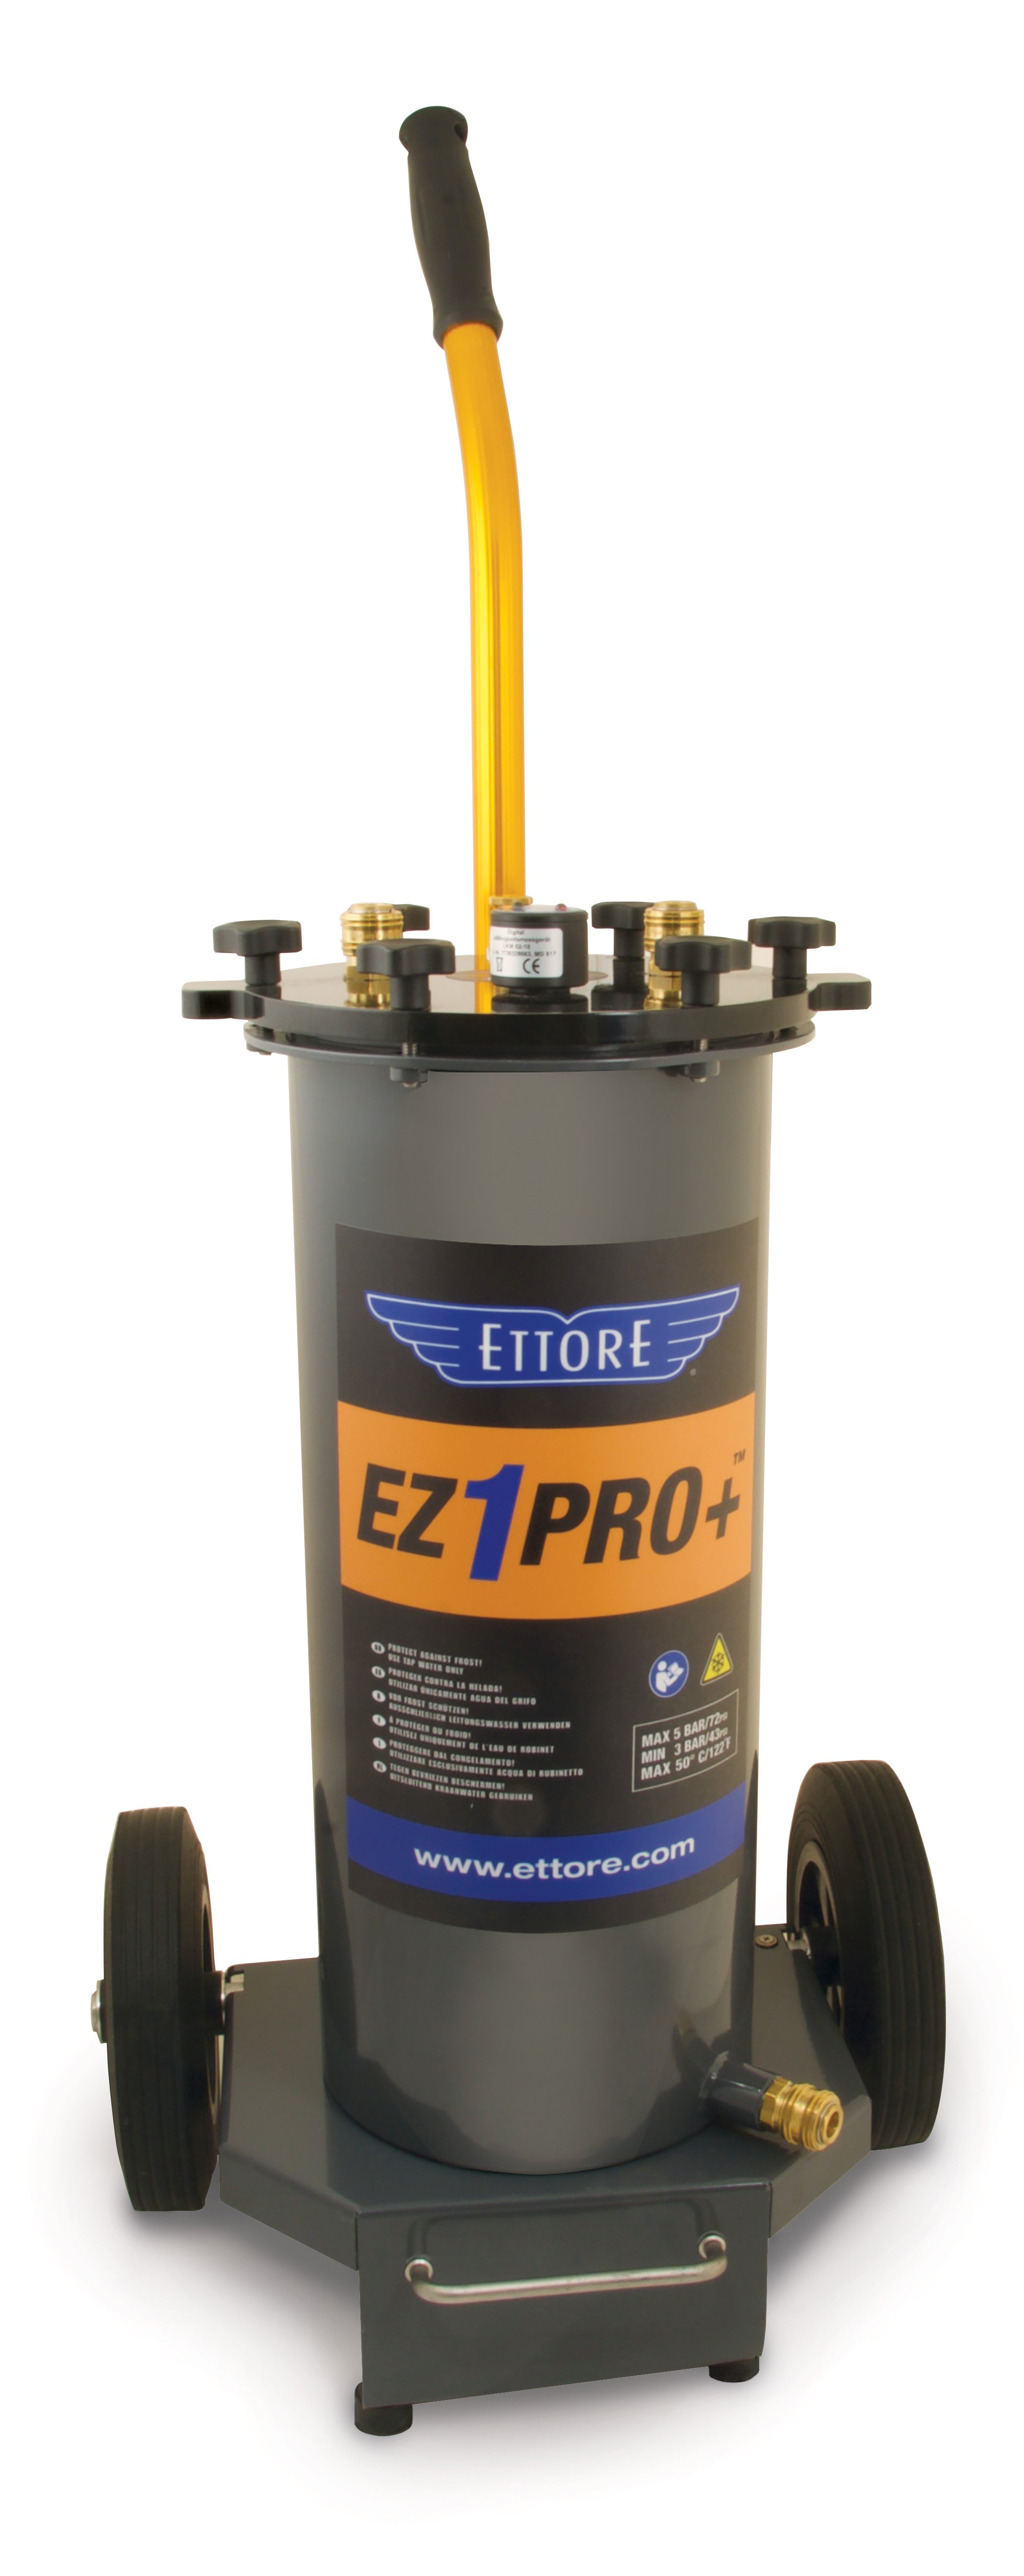 EZ1Pro+ DI System Ettore Questions & Answers